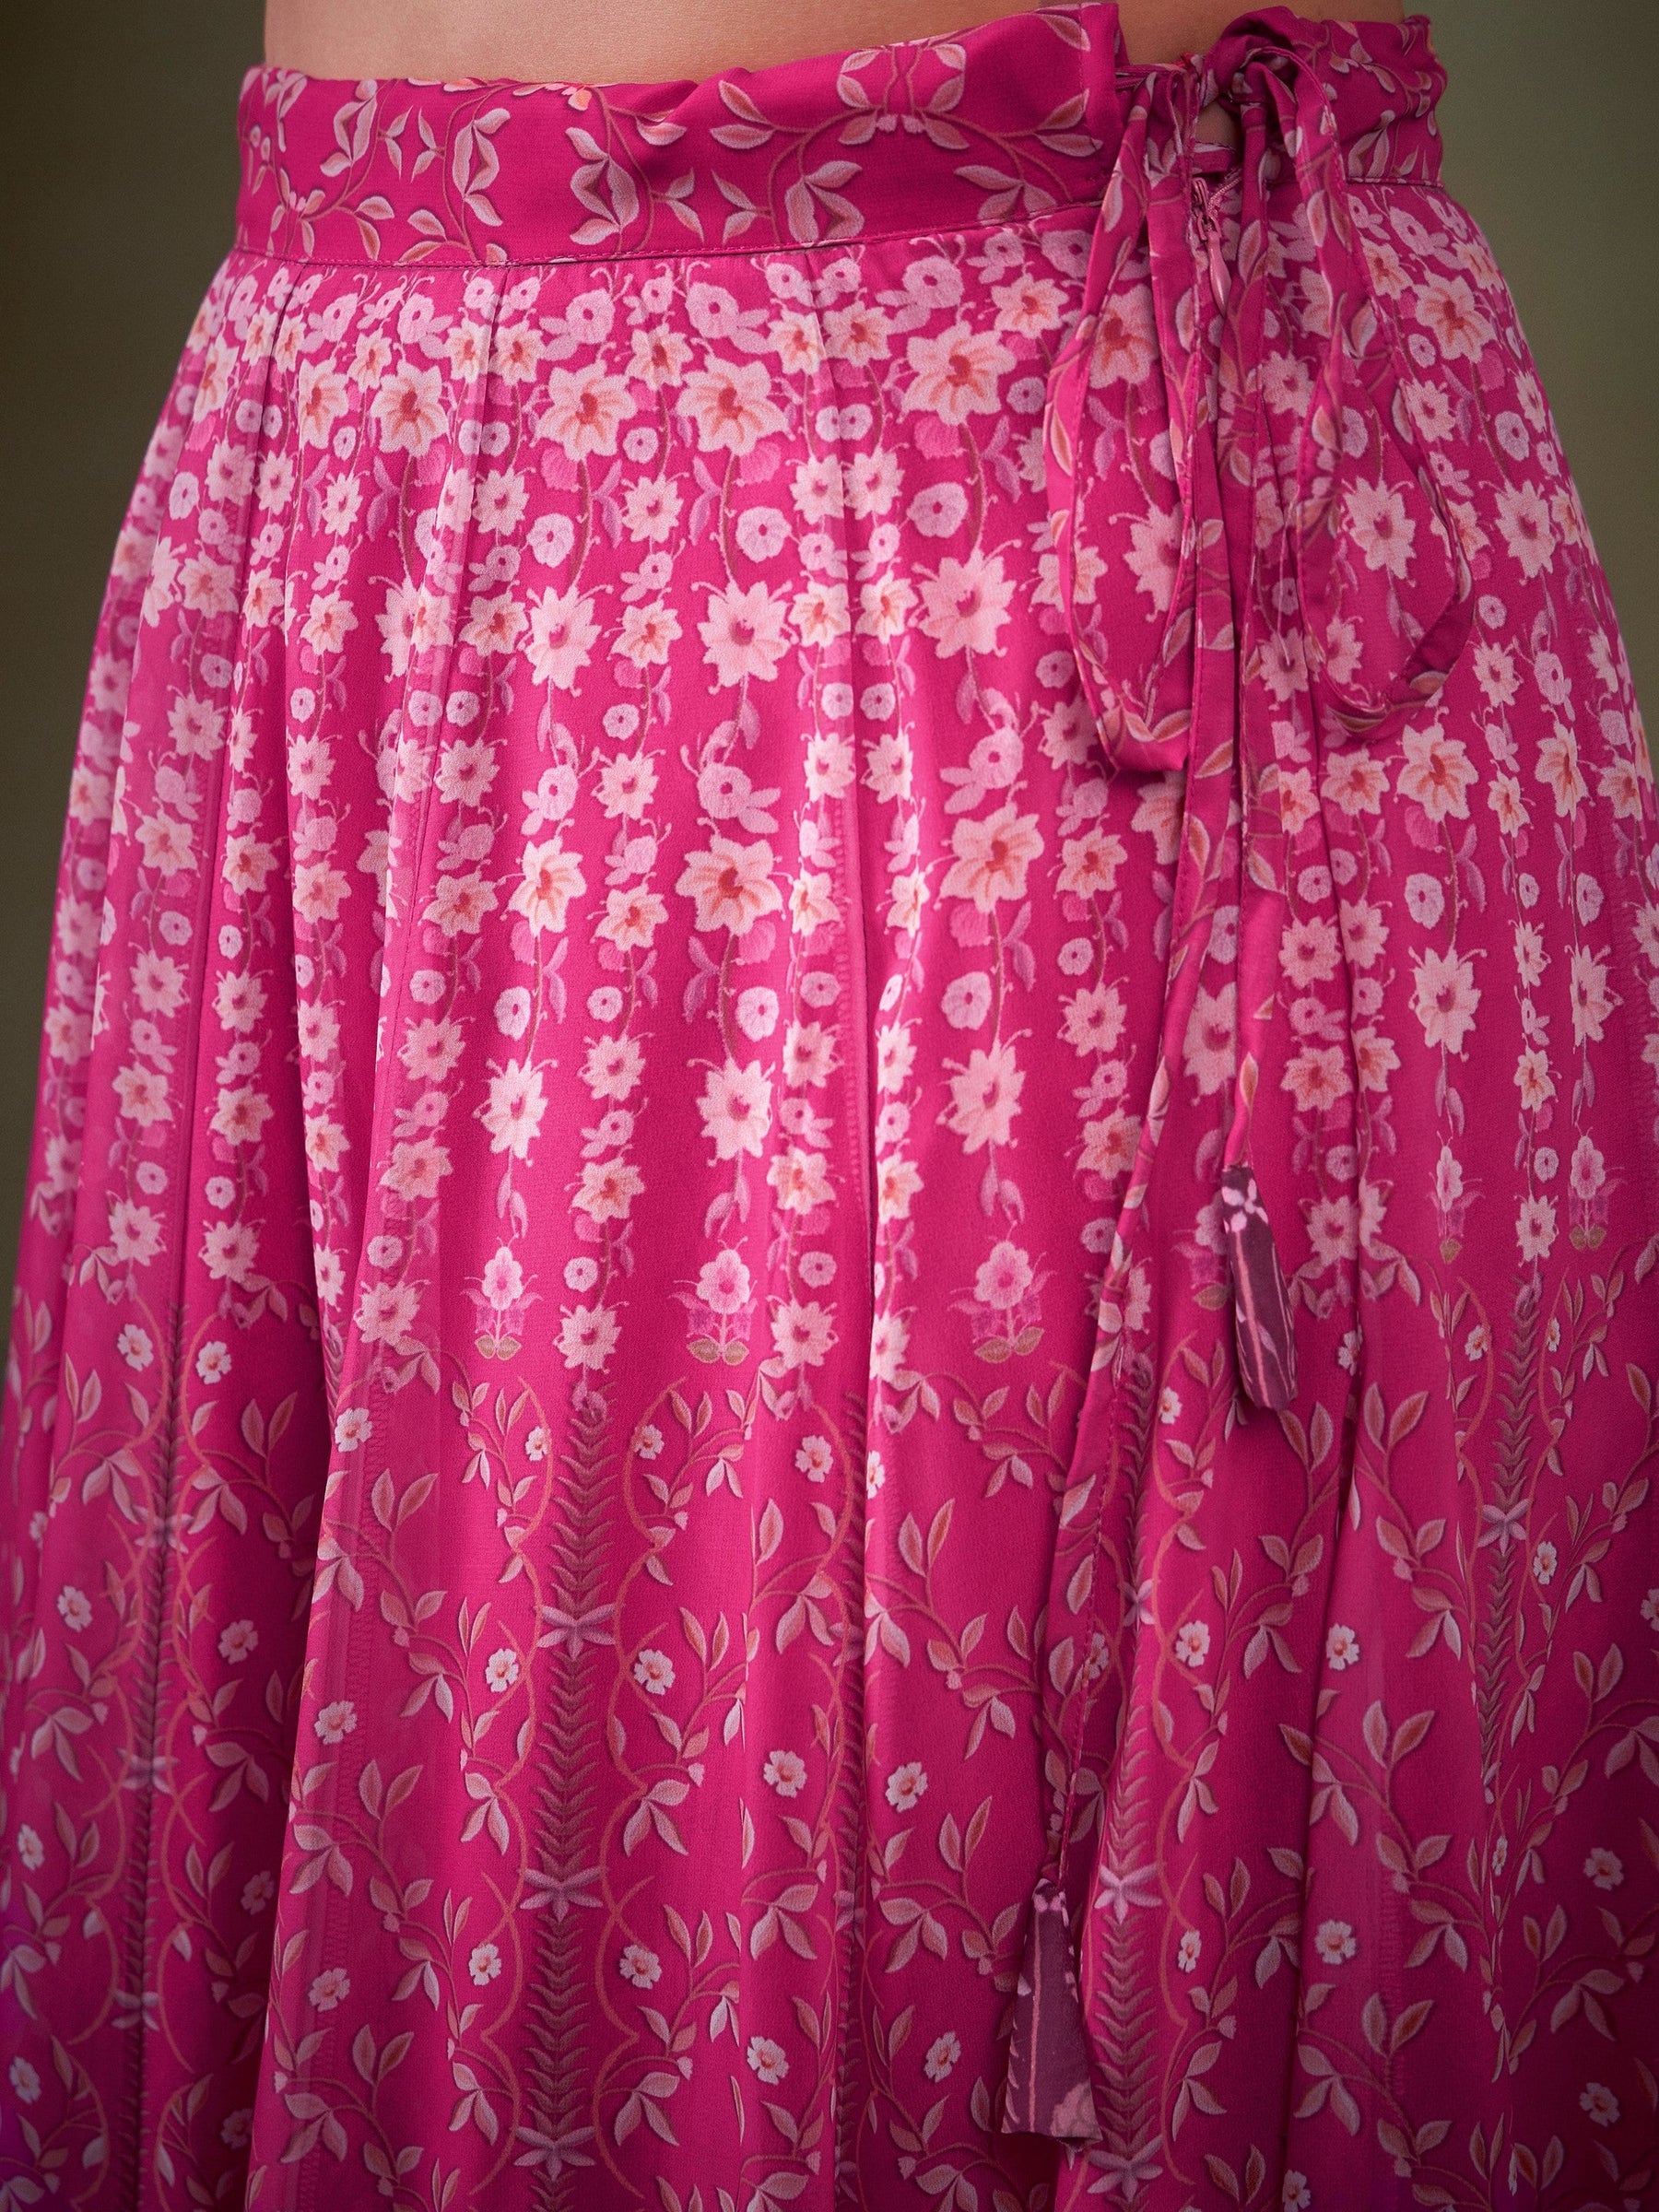 Pink Floral Anarkali Skirt With Crop Top-Shae by SASSAFRAS